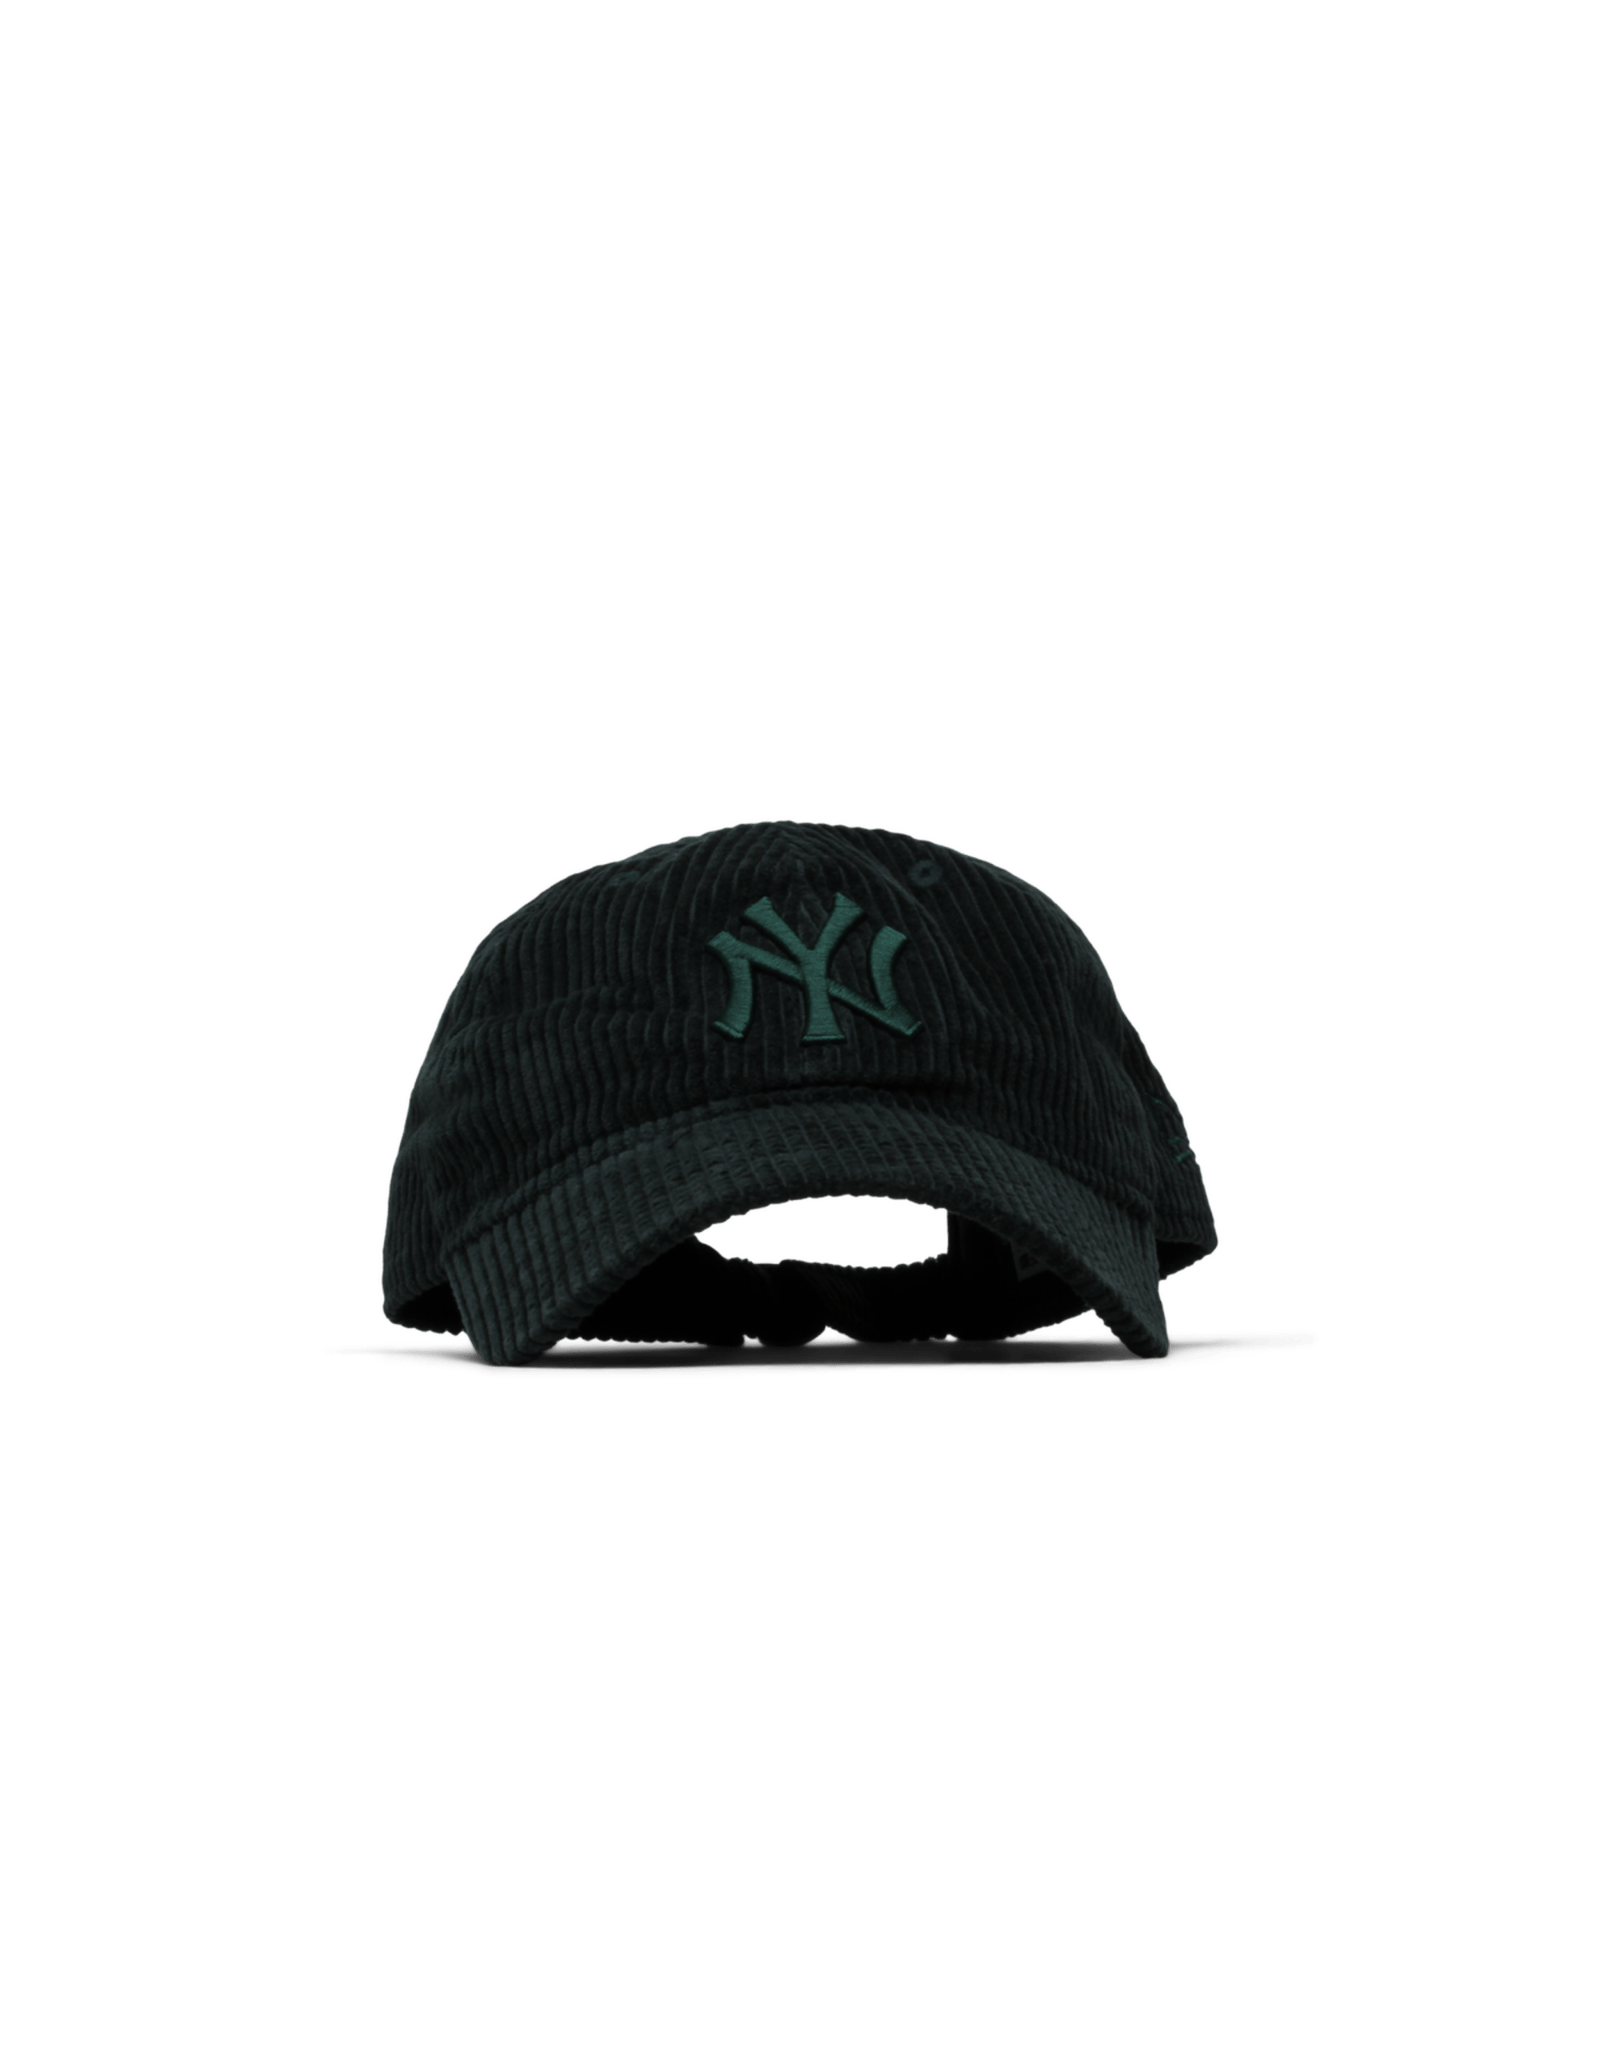 NY Yankees 9TWENTY Adjustable Corduroy Cap